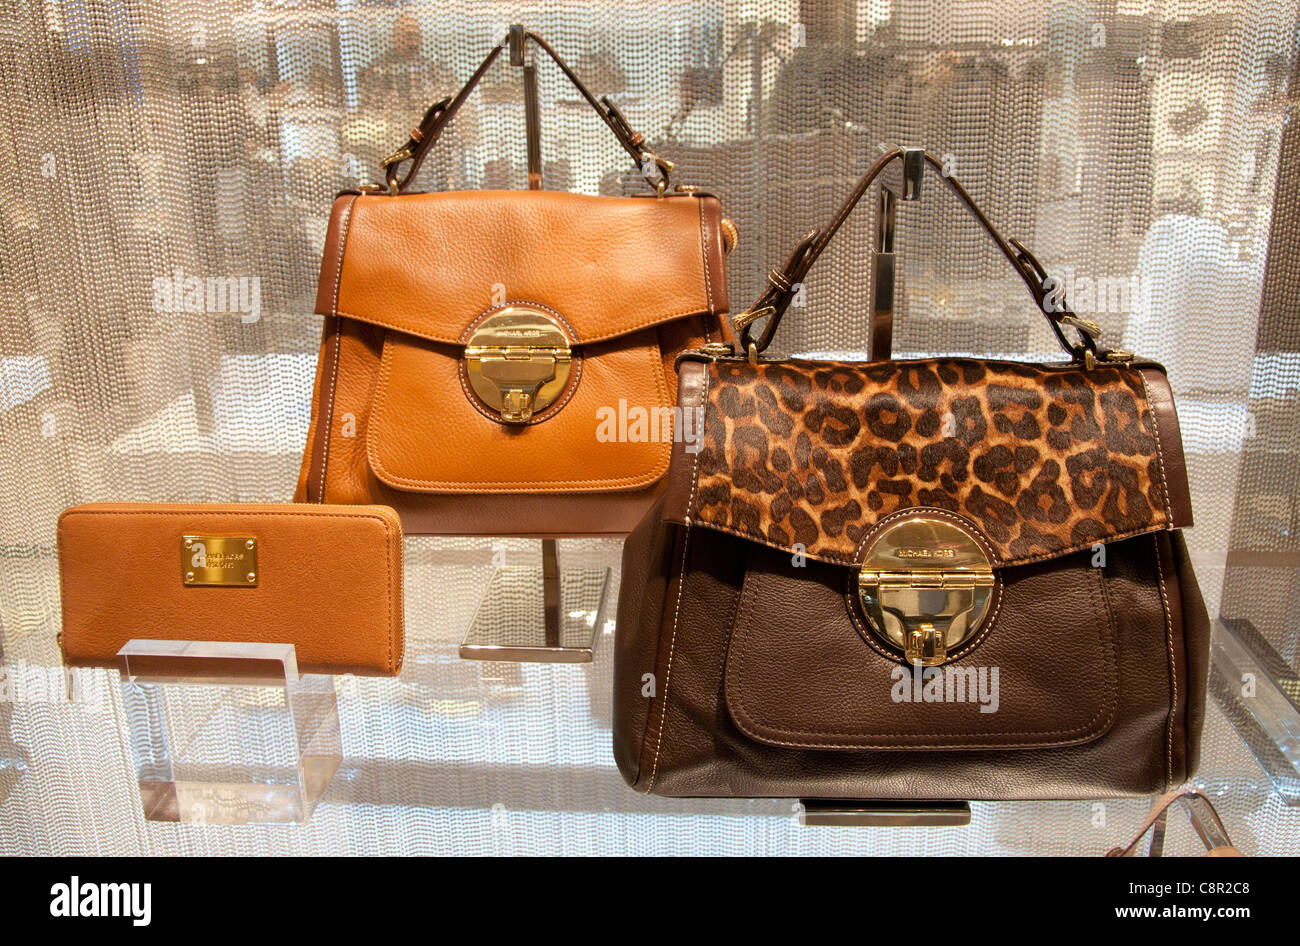 Bag Bags Michael Kors New York shop display window United states of America  Stock Photo - Alamy